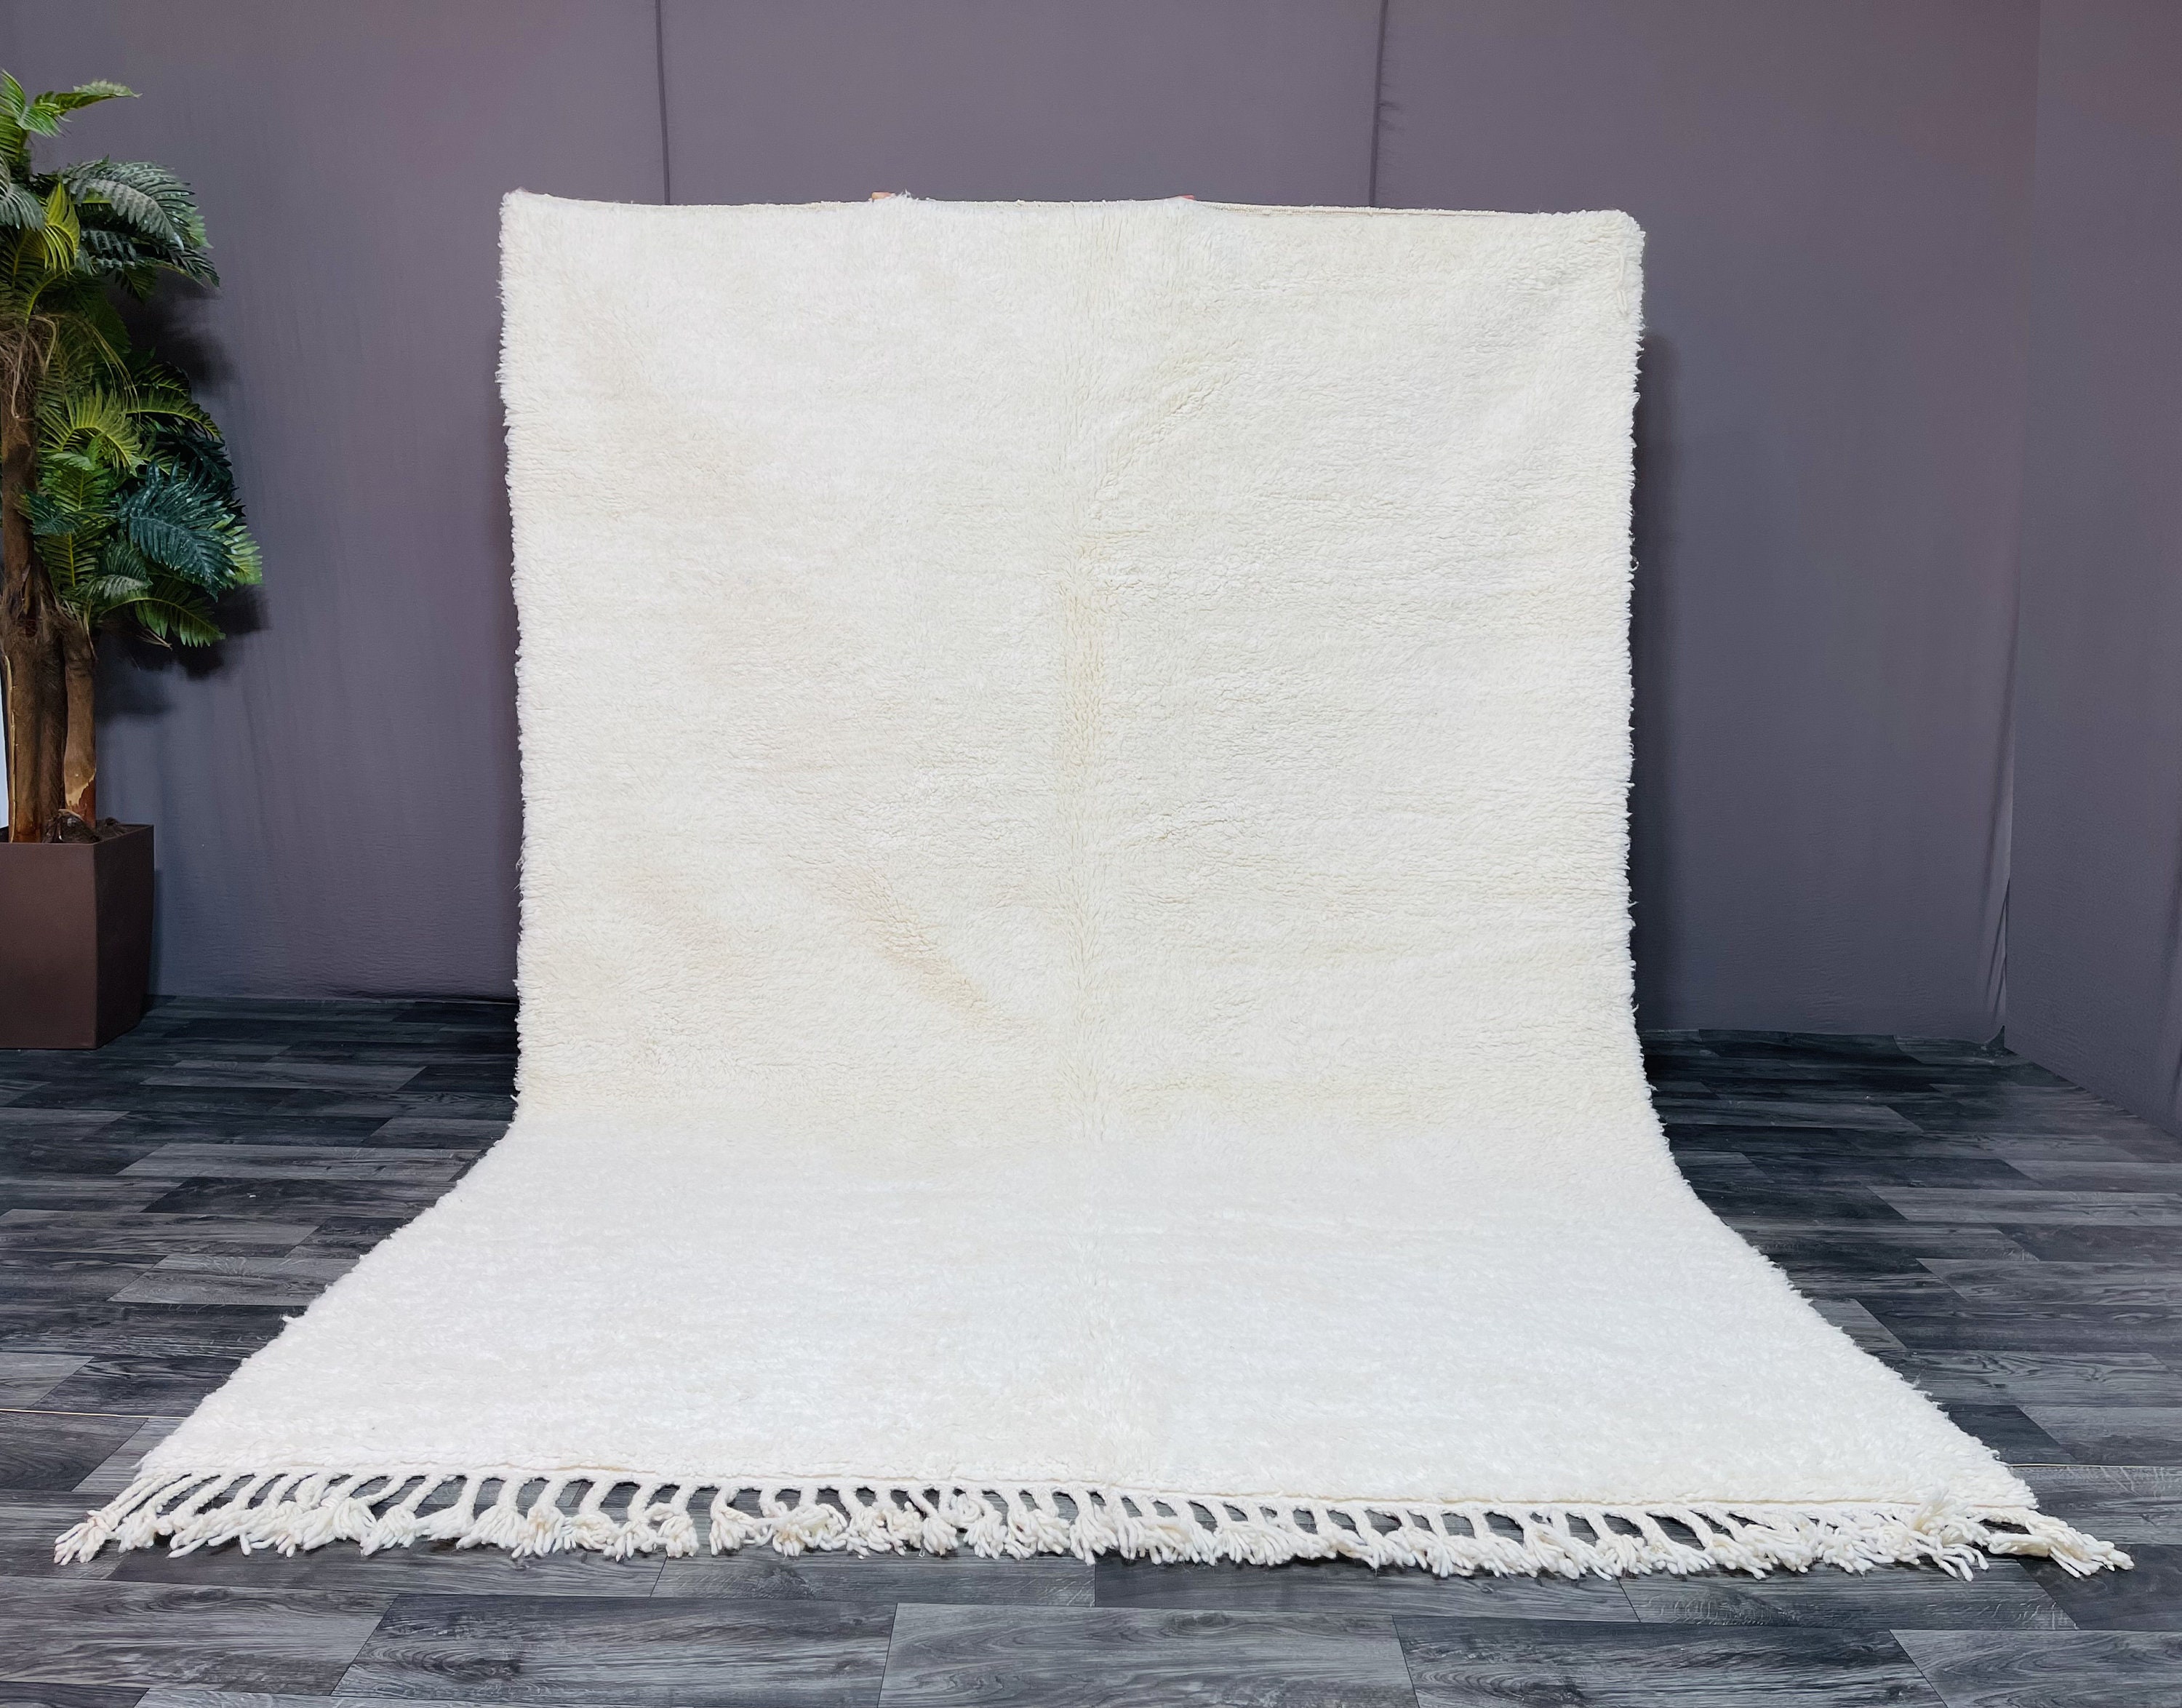 Handmade Beni Ourain Rug 9.6 X 6.7 Ft-Fabulous Cream Rug-Personaliezd White For Living Room, Nursery